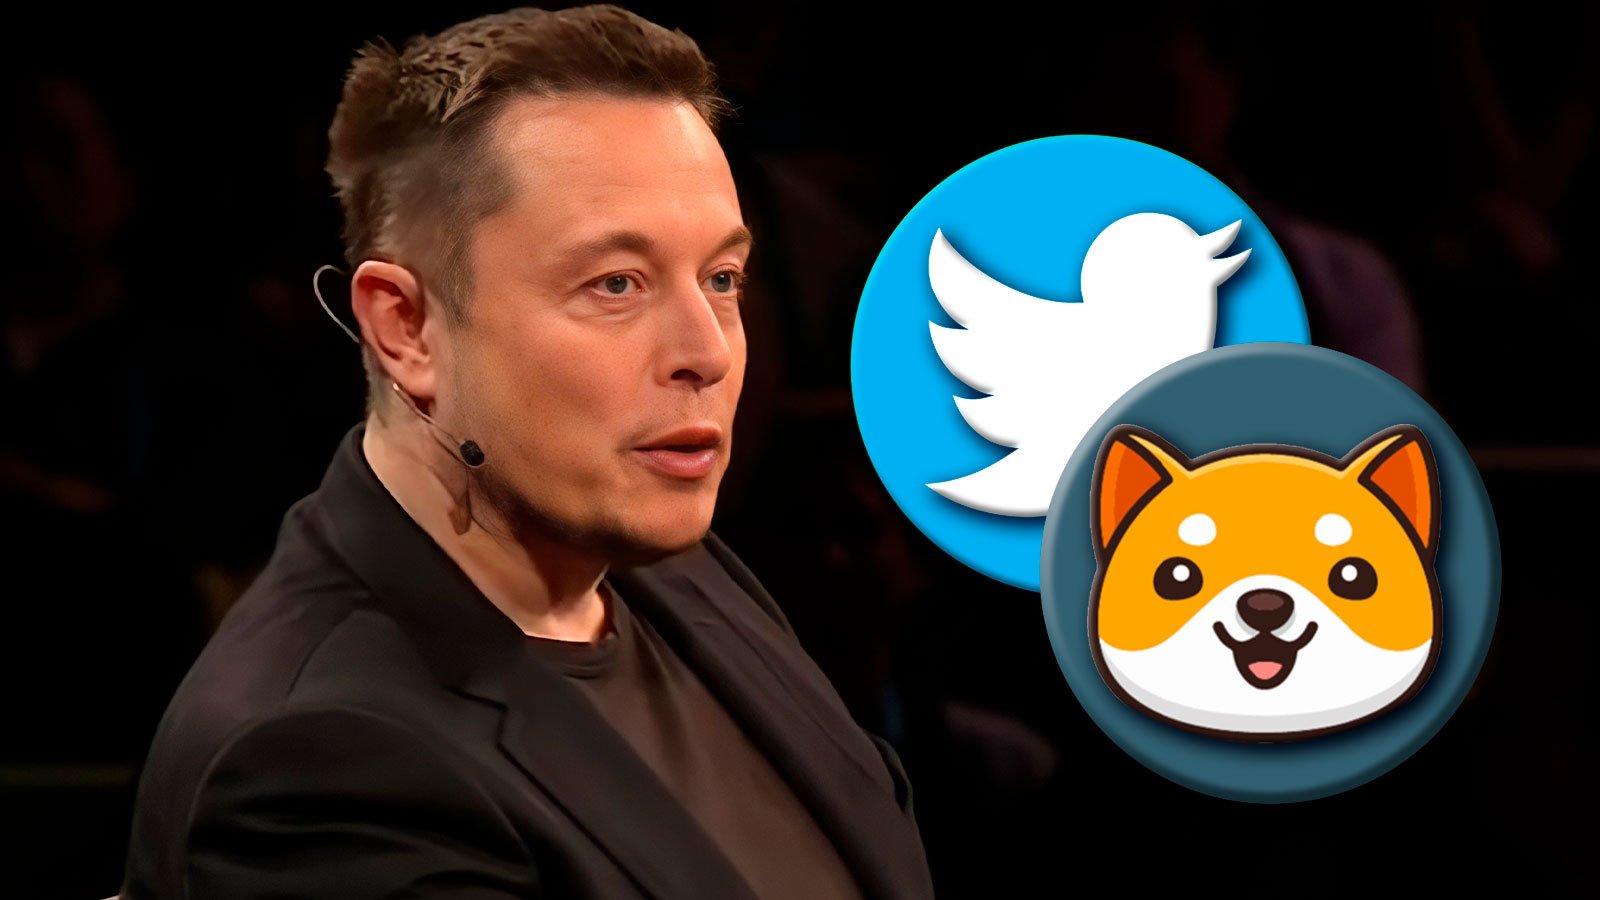 BabyDoge Community Responds to Elon Musk’s Tweet, Price Briefly Jumps